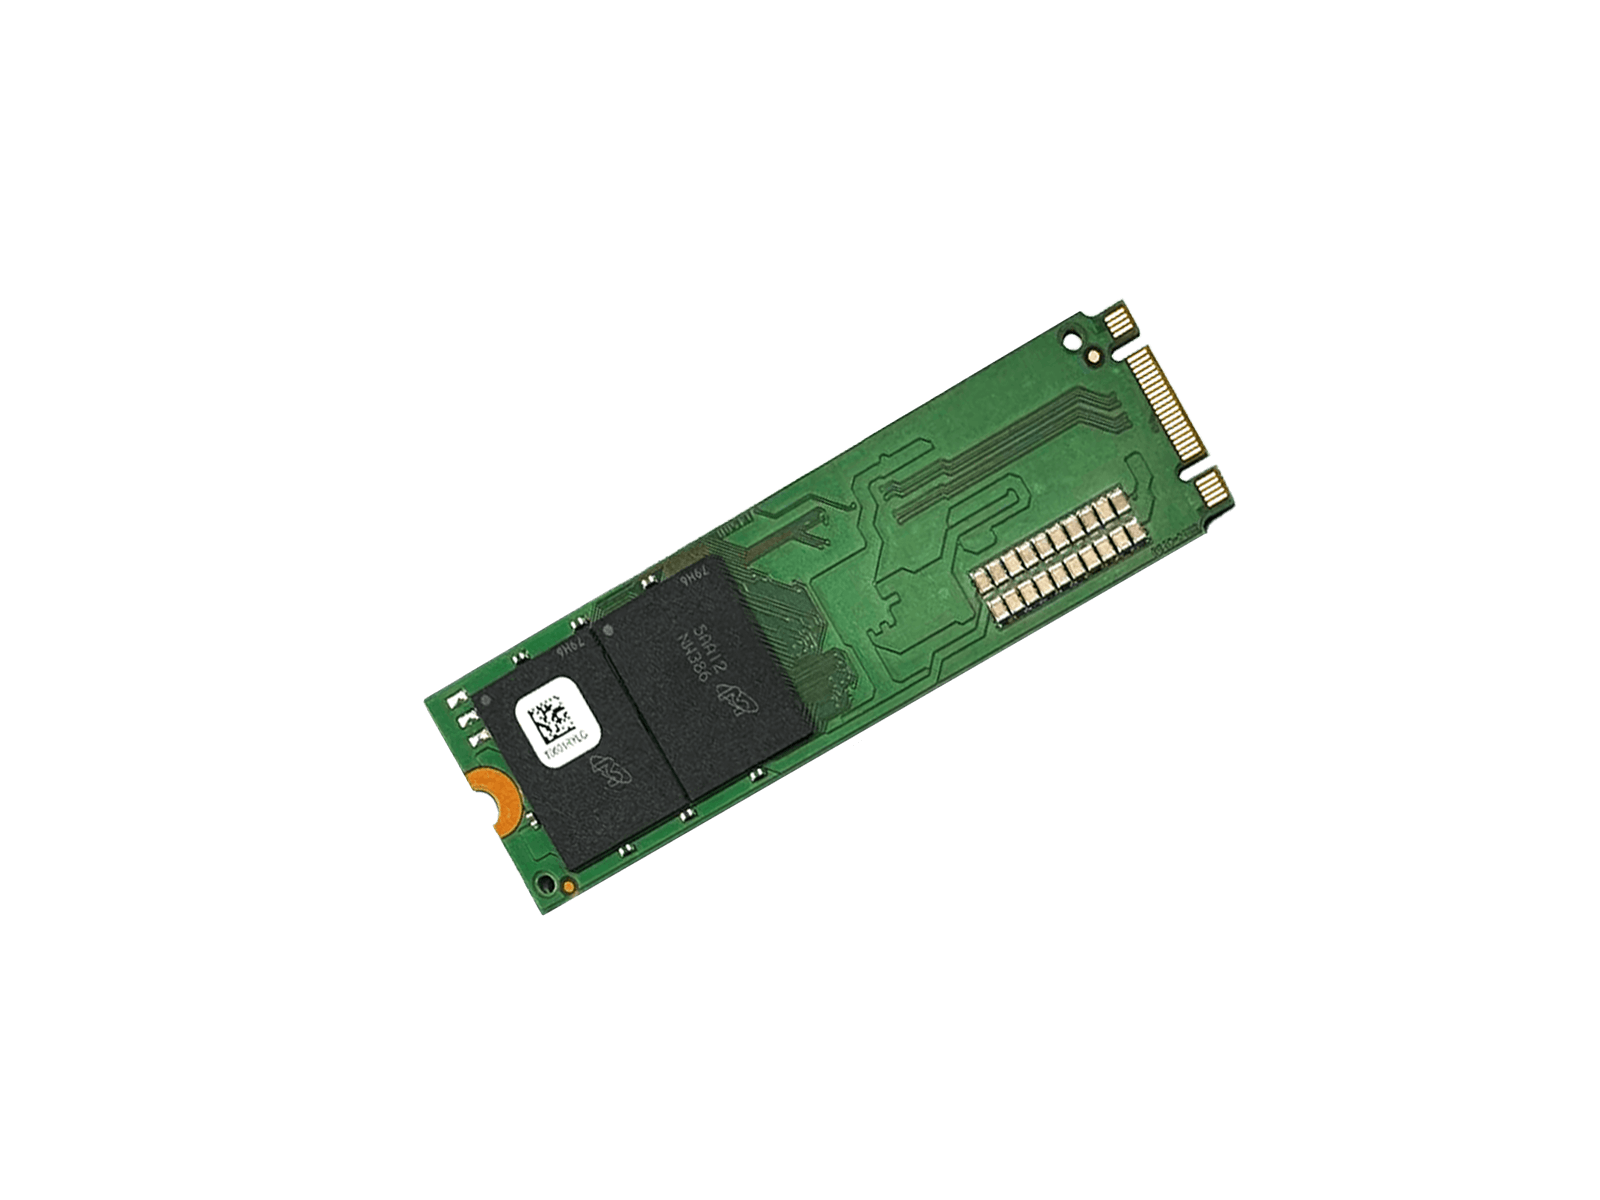 HPE 753151-001 120GB SATA 6Gb/s M.2 2280 MLC SSD Solid State Drive